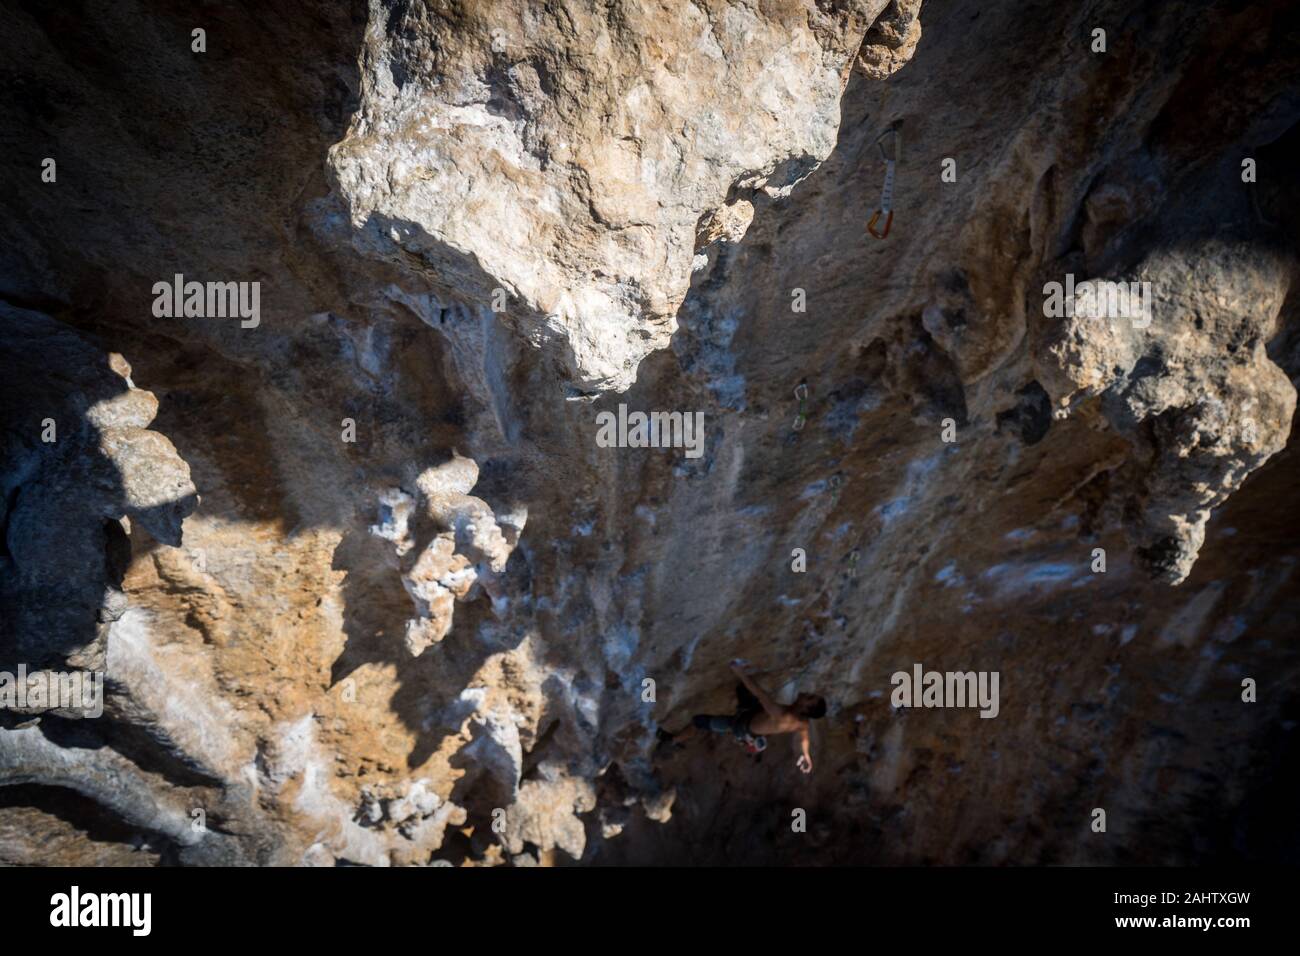 Man Leading Hard Rock Climbing Route, Fantasma at Ghost Kitchen in Kalymnos, Greece. Stock Photo